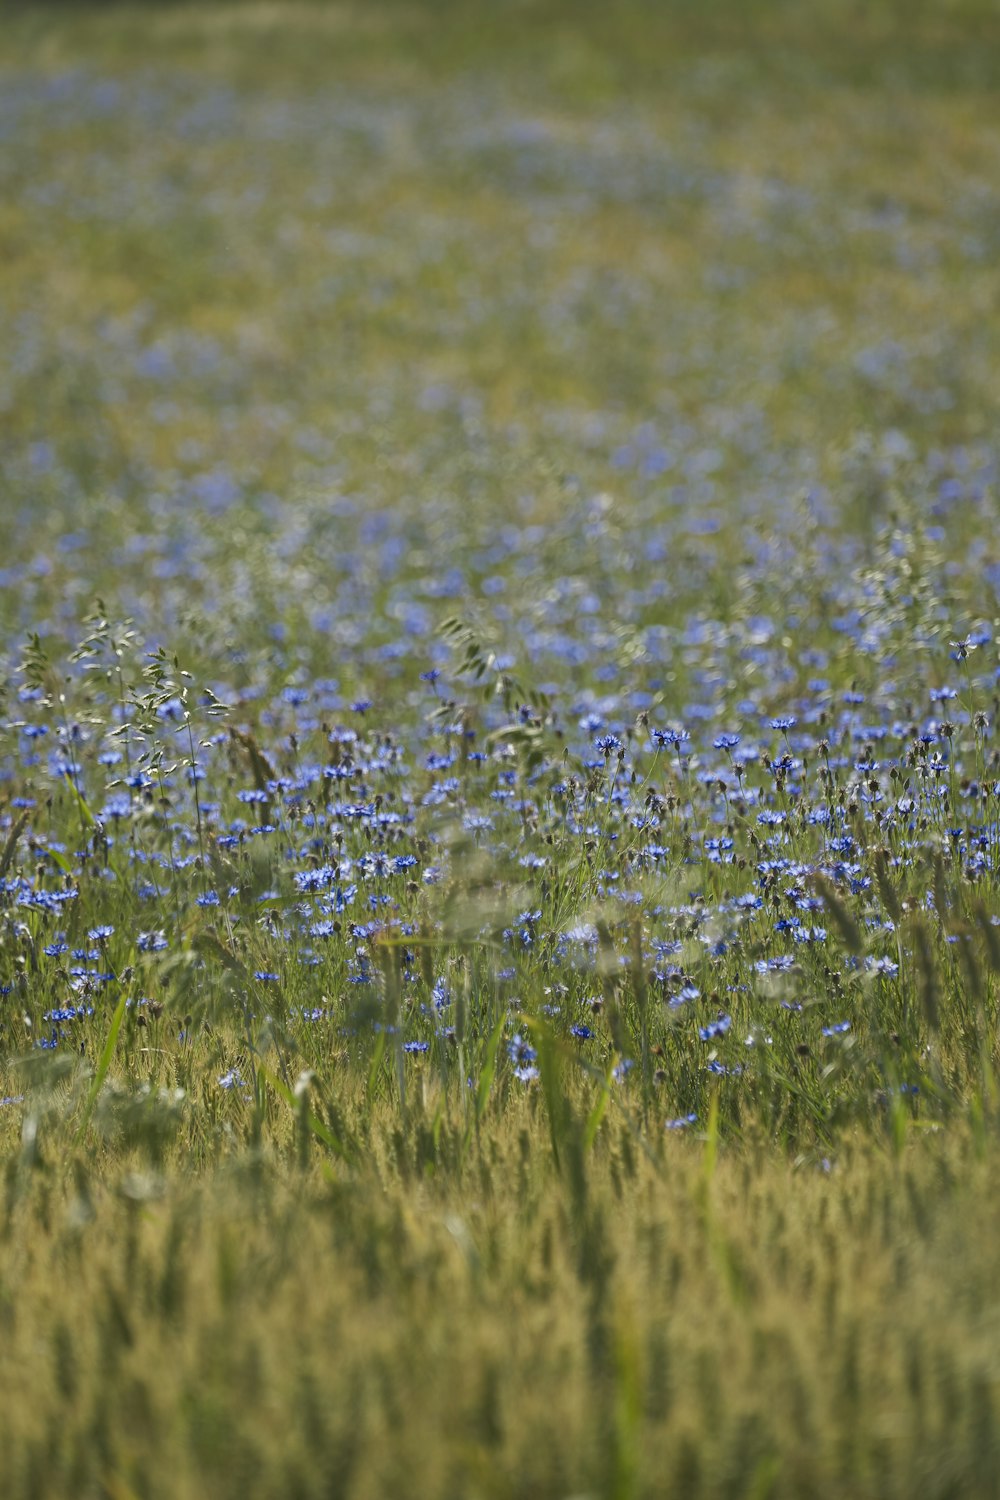 a bird standing in a field of blue flowers